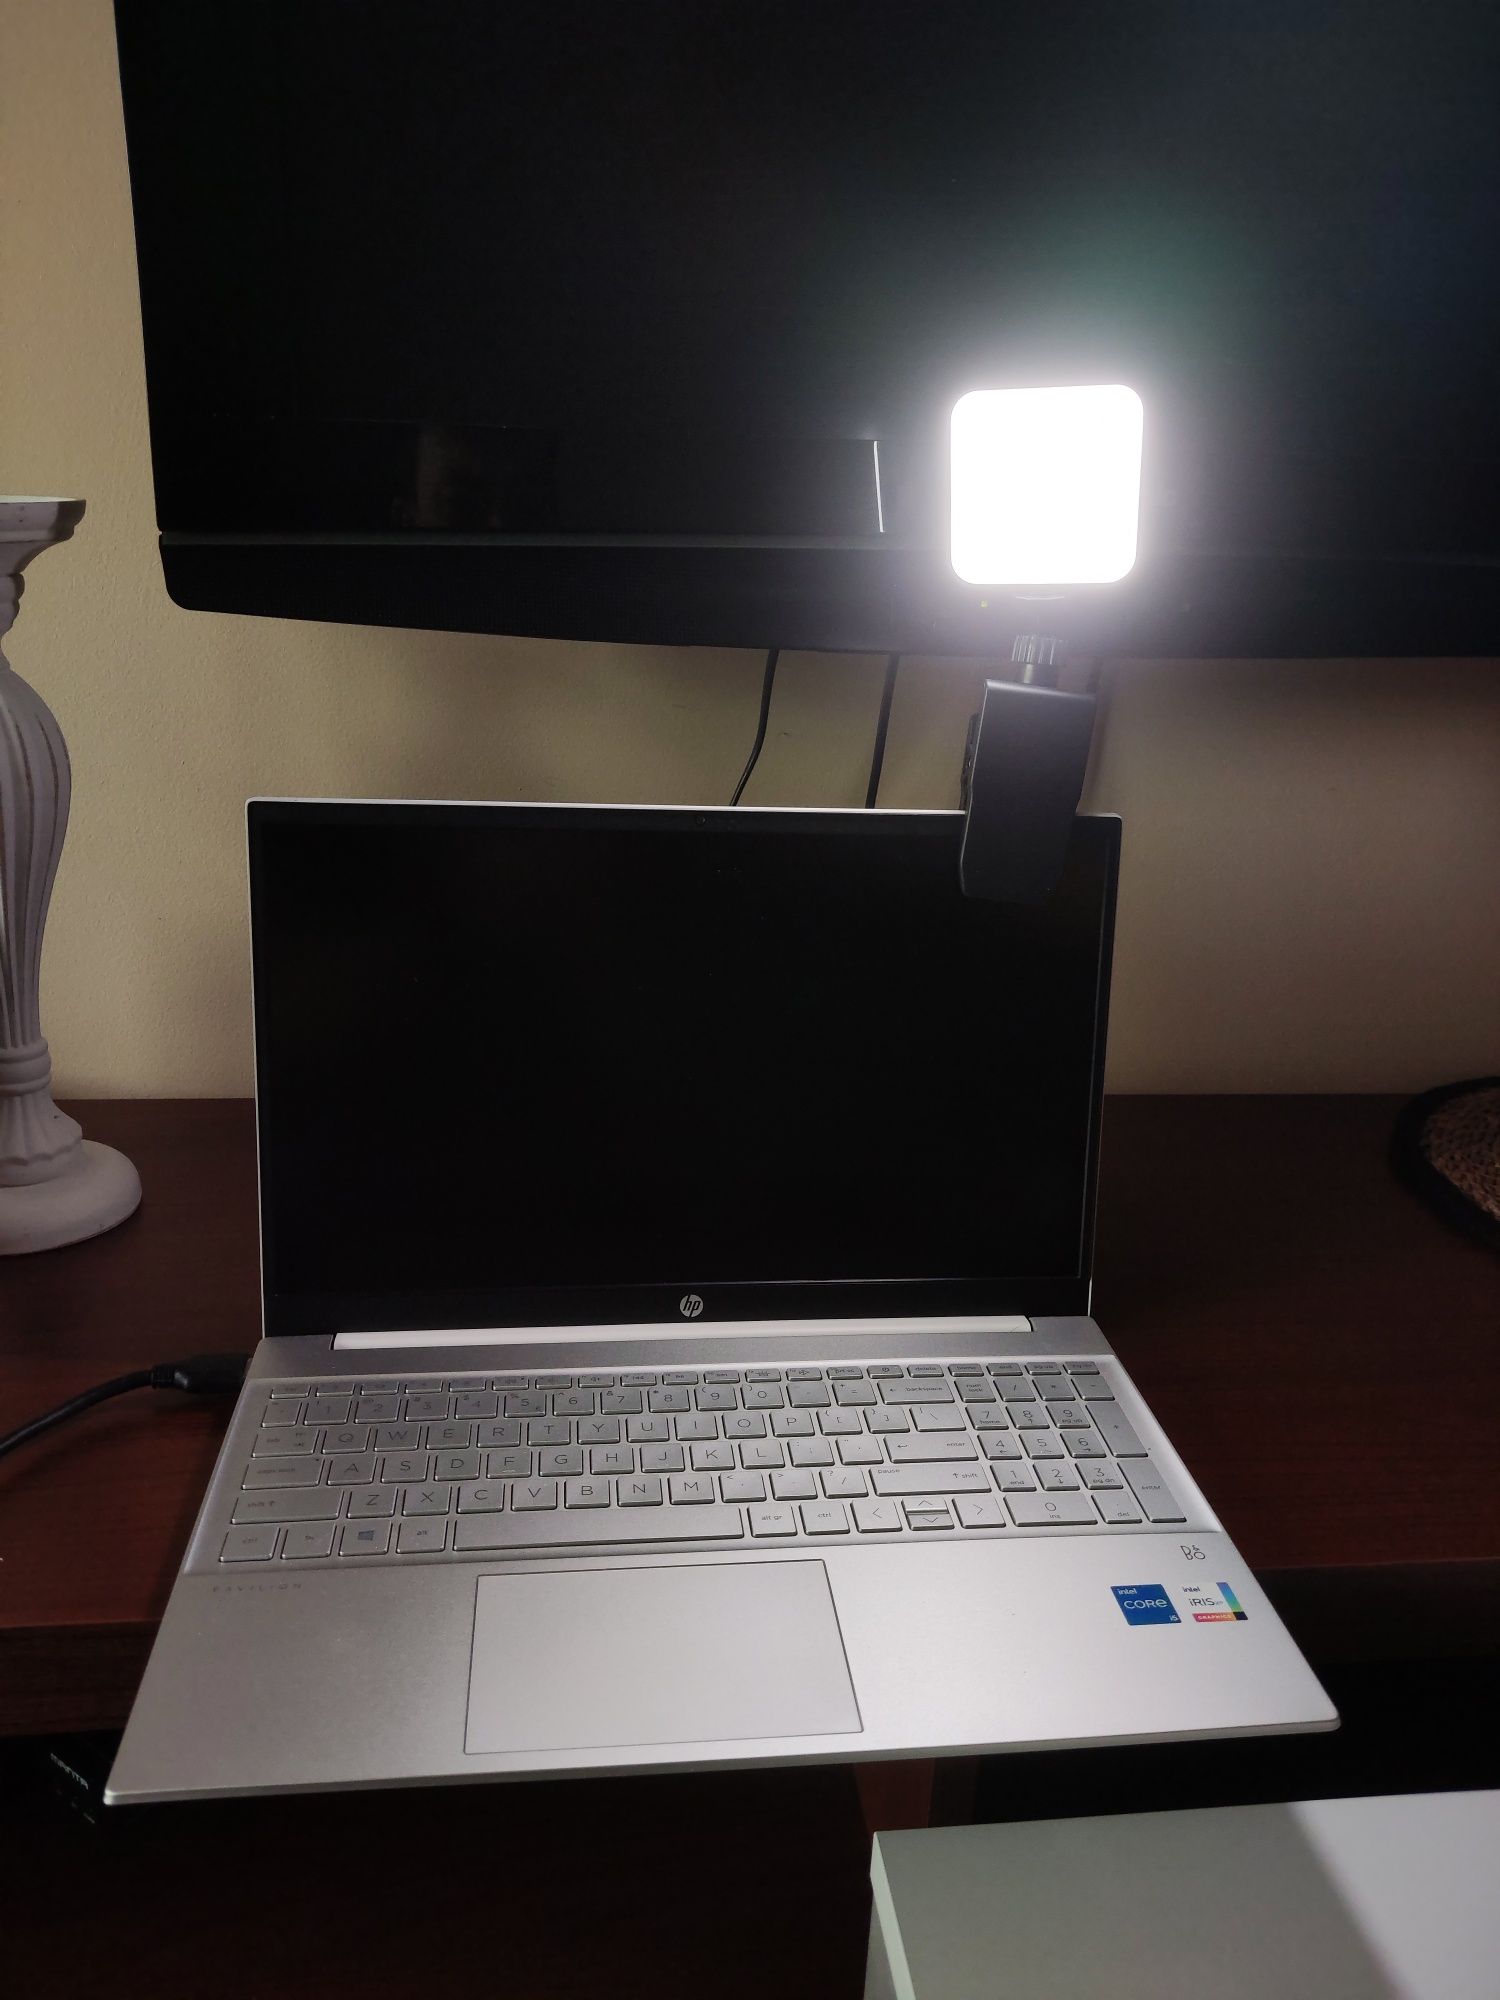 Lampa do nagrywania YouTube filmów do telefonu laptopa